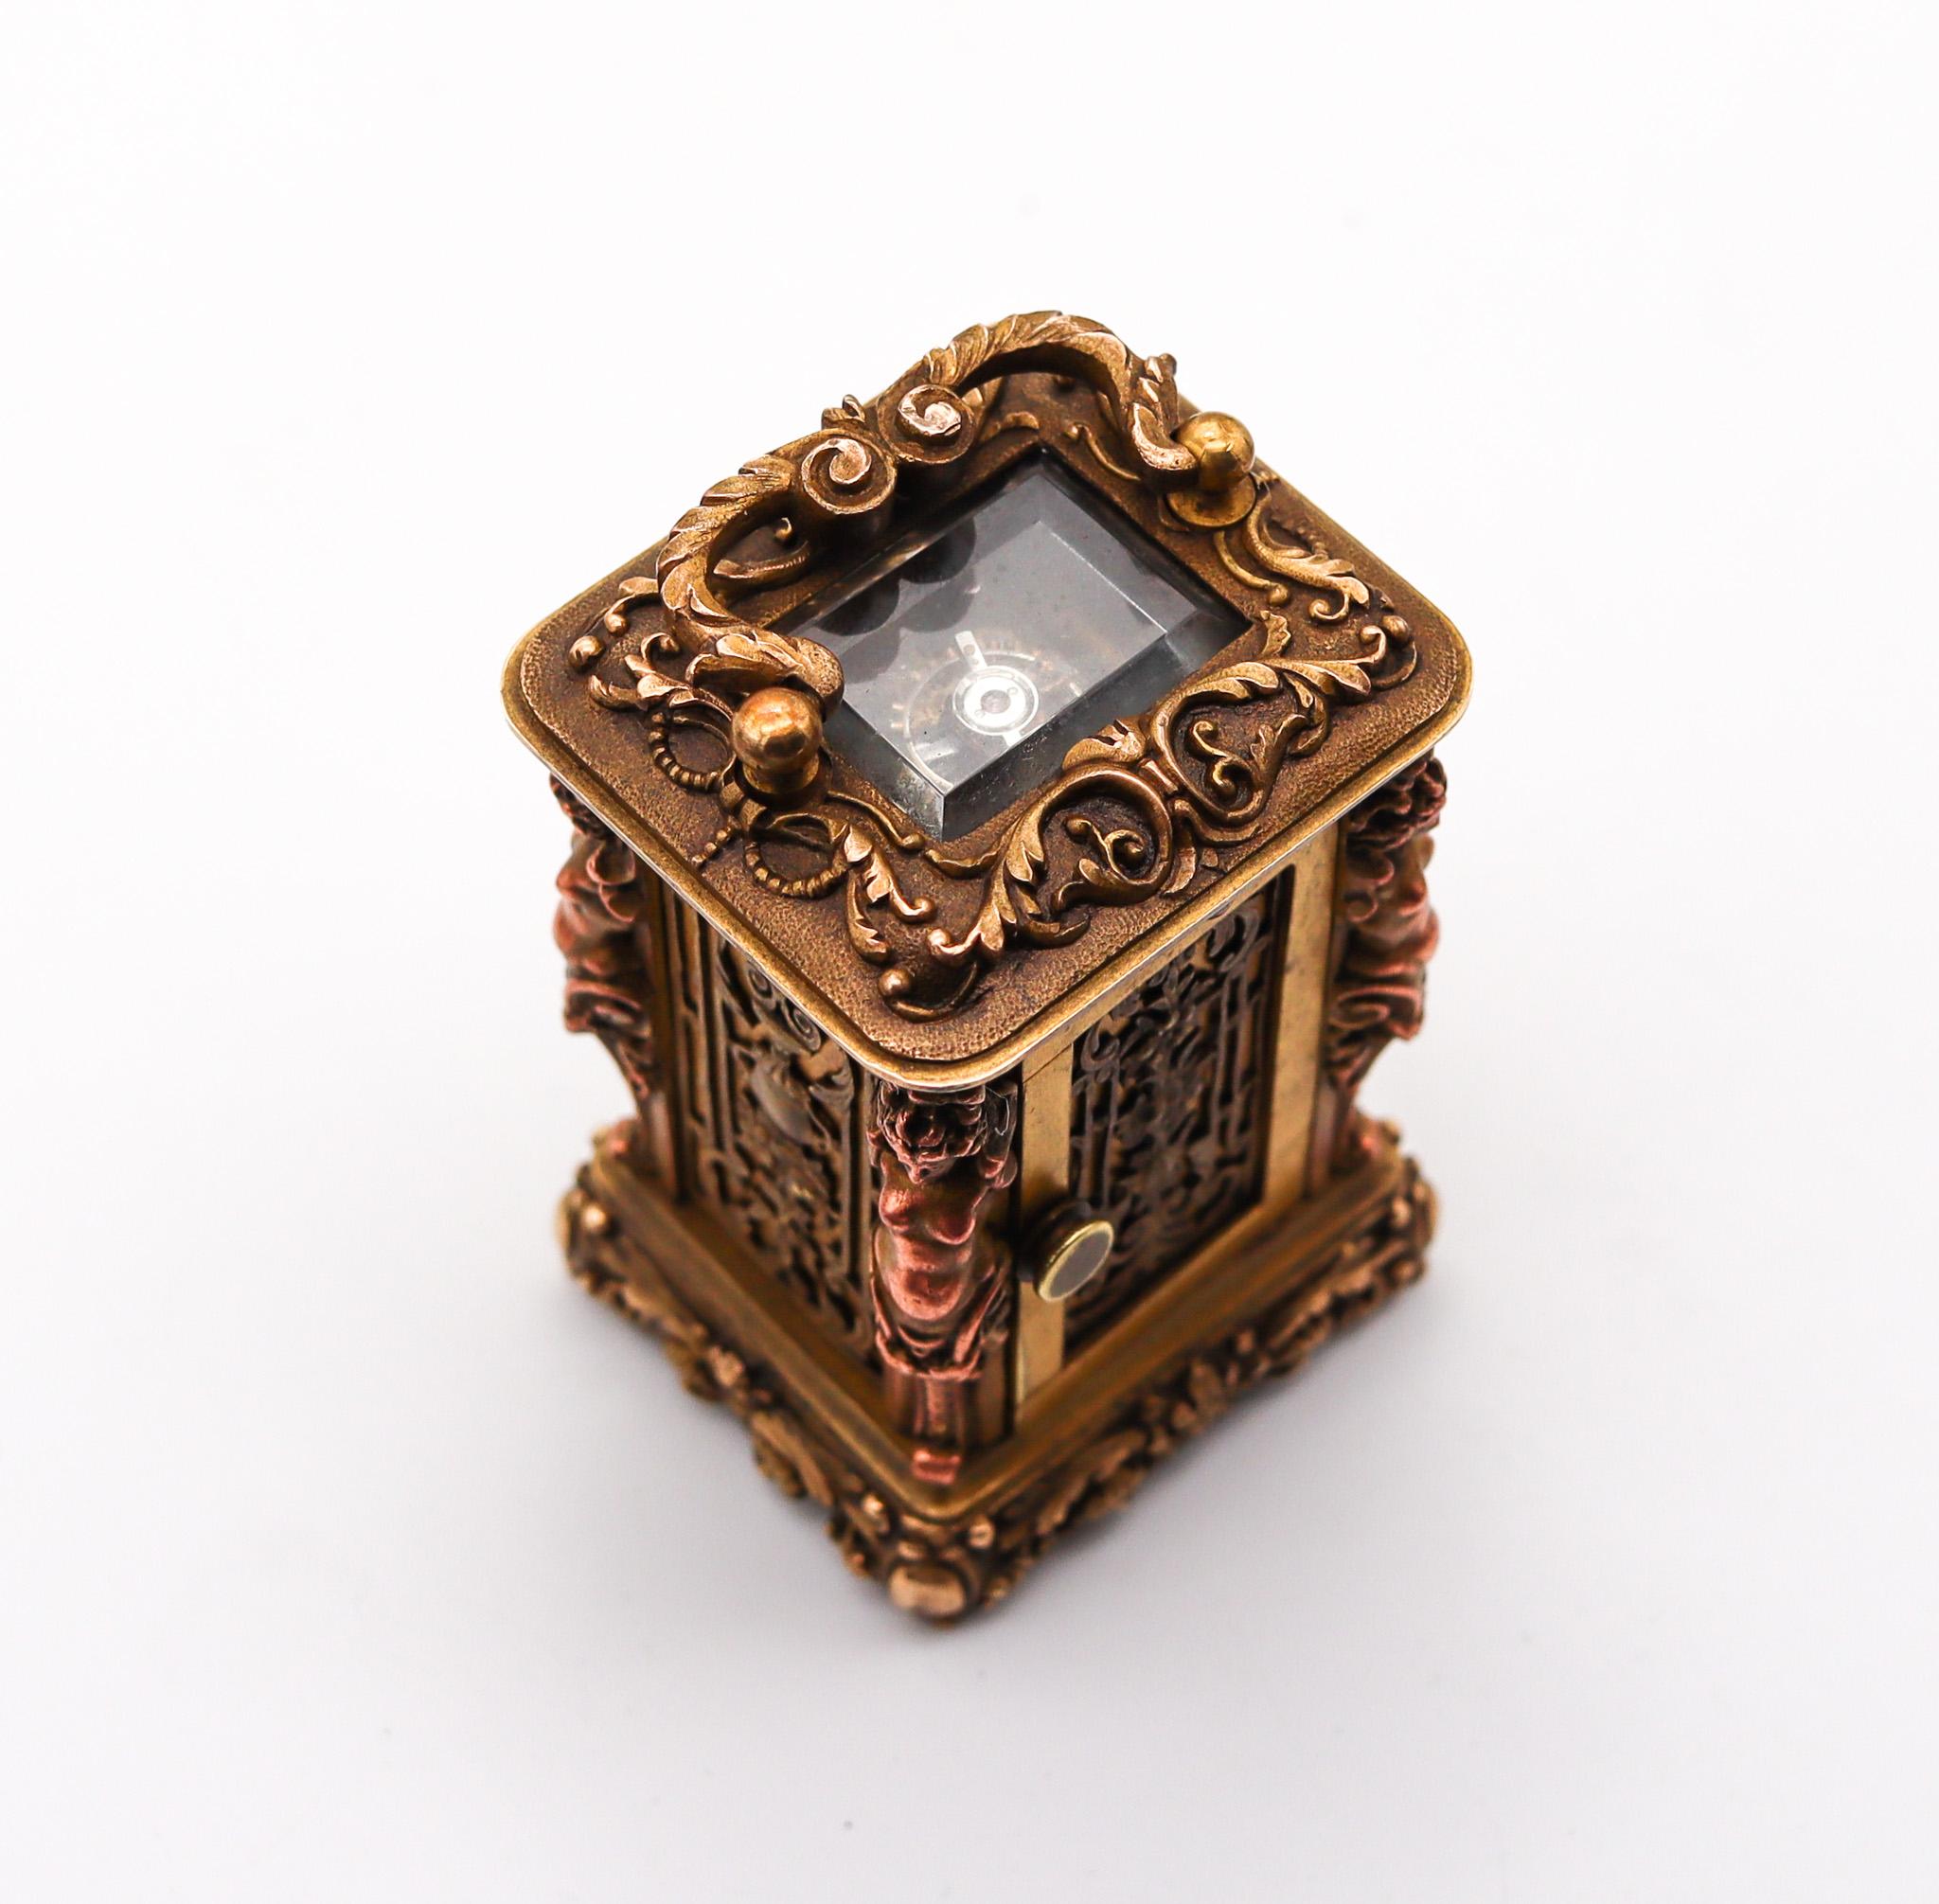 19th Century Charles Hour 1870 French Neo Classic Miniature Carriage Travel Clock Gilt Ormolu